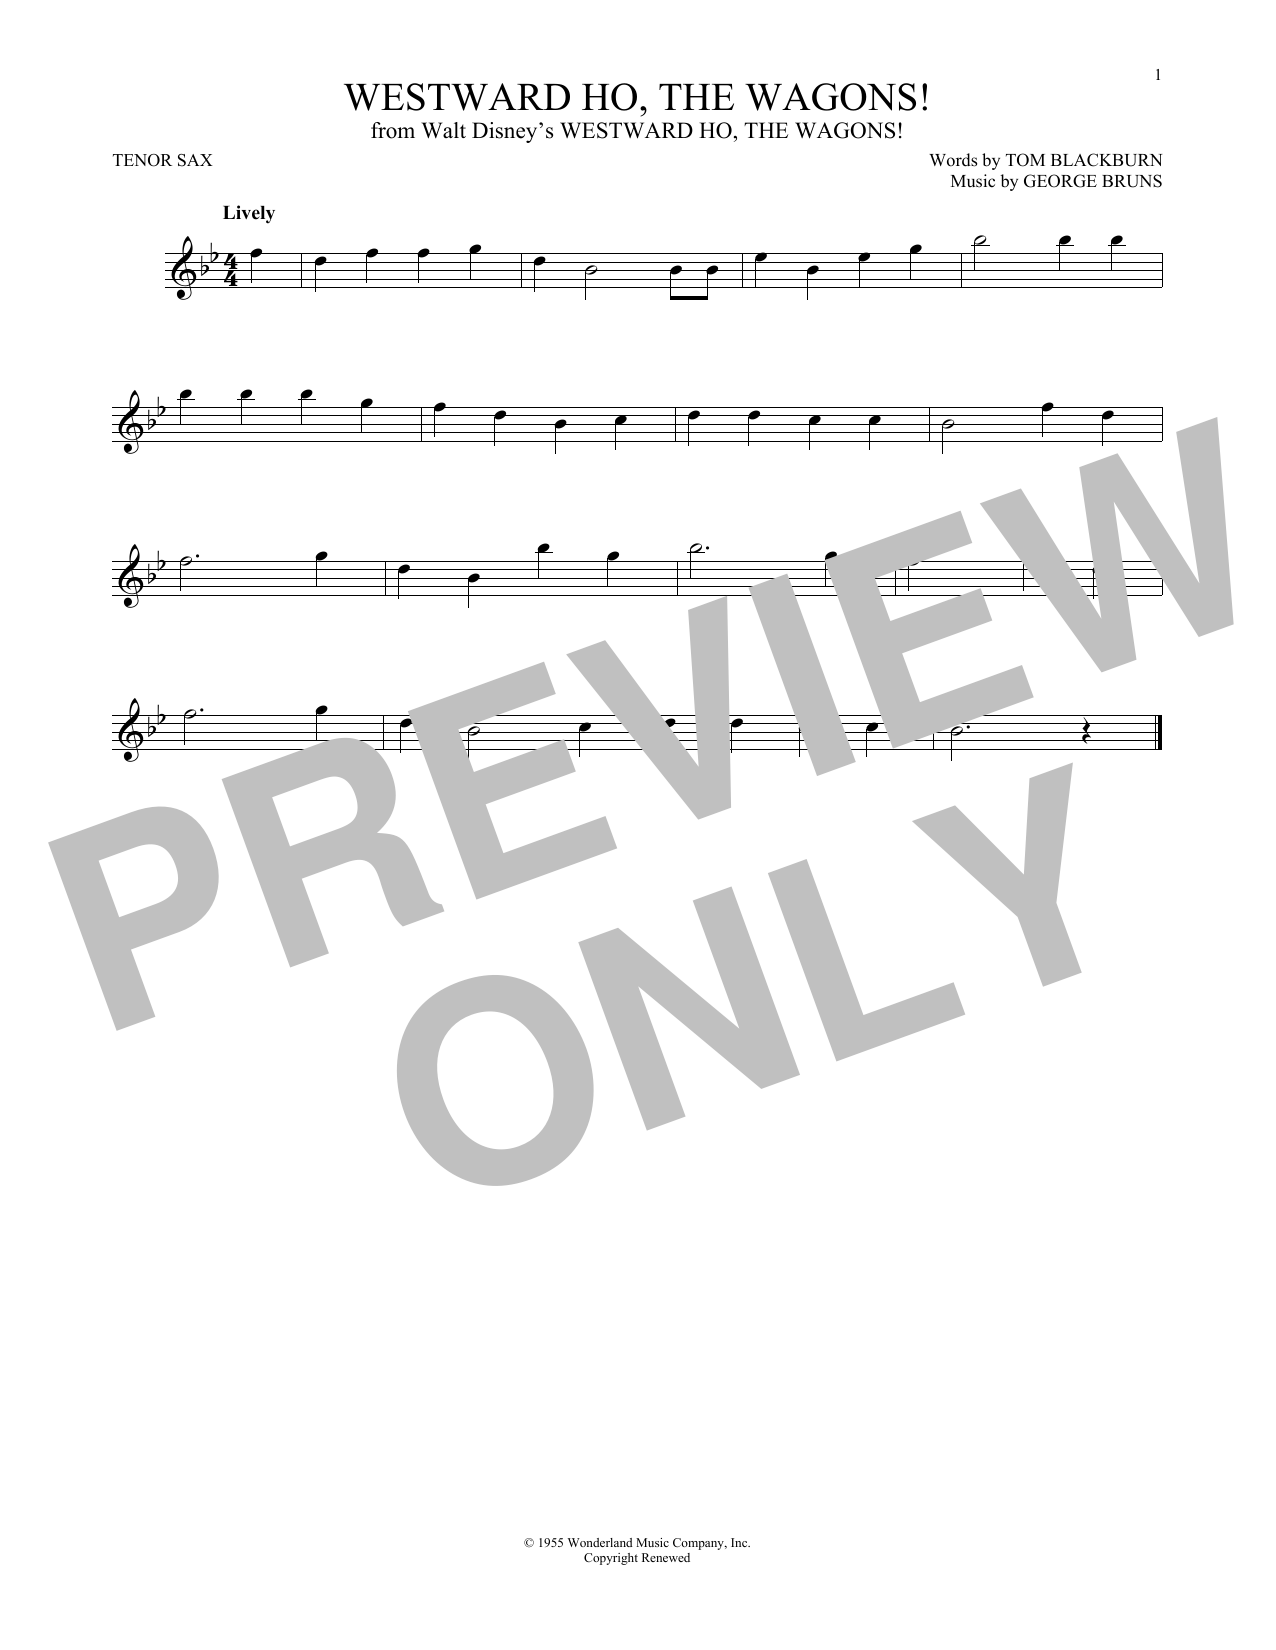 George Bruns Westward Ho, The Wagons! Sheet Music Notes & Chords for Guitar Chords/Lyrics - Download or Print PDF